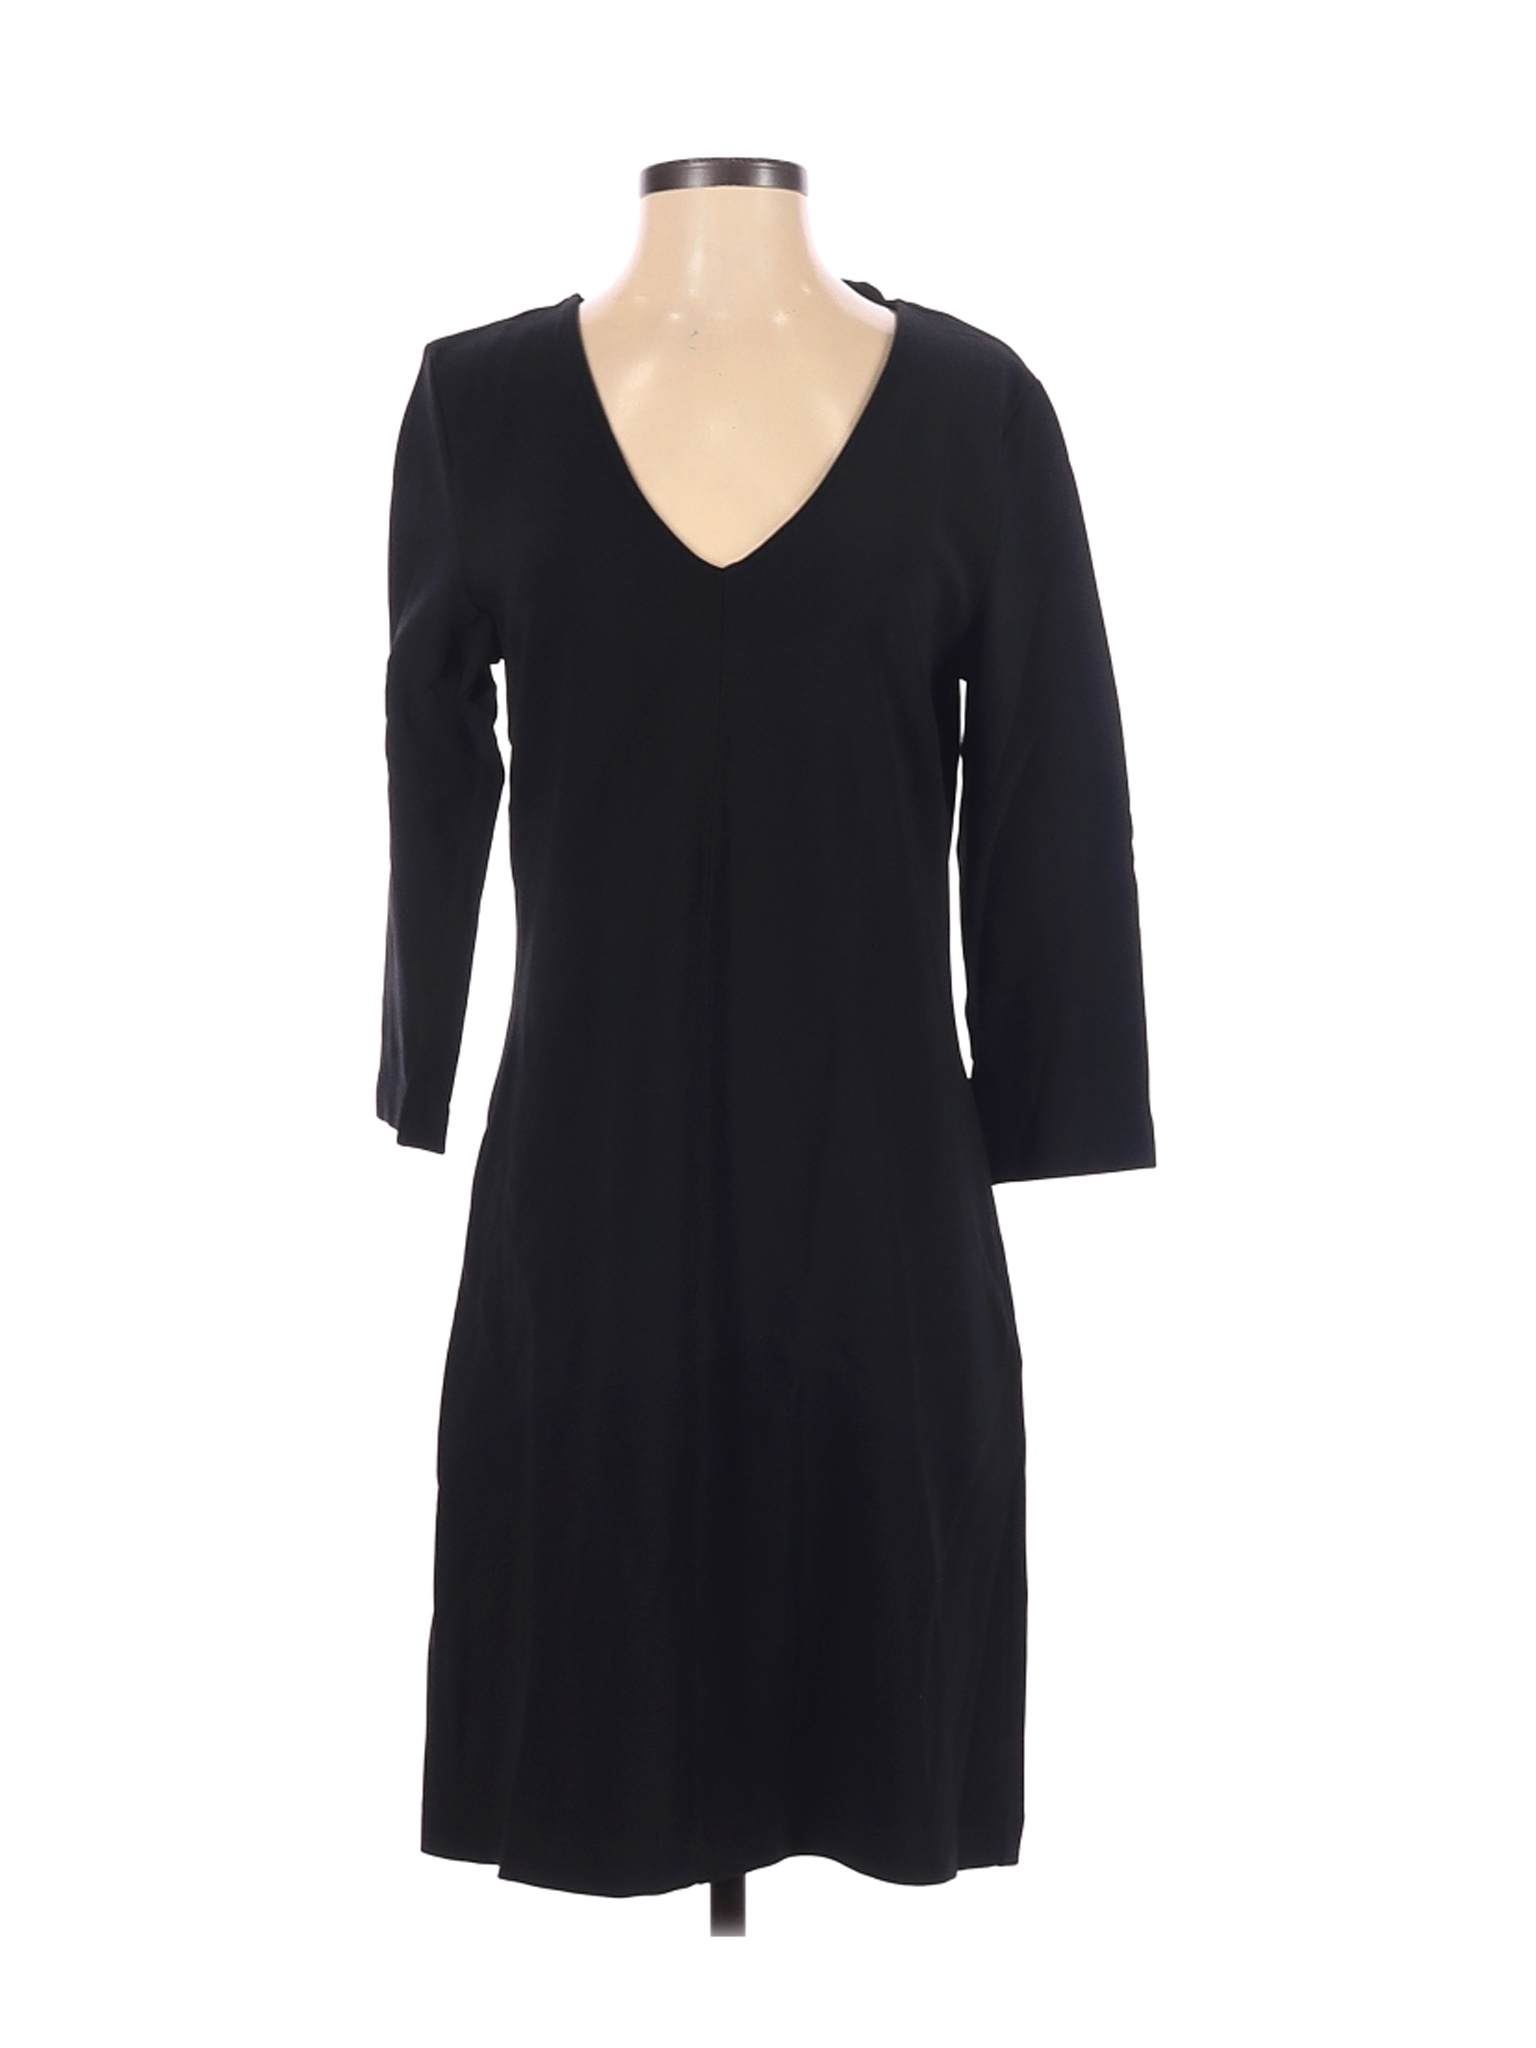 Boston Proper Women Black Casual Dress S | eBay